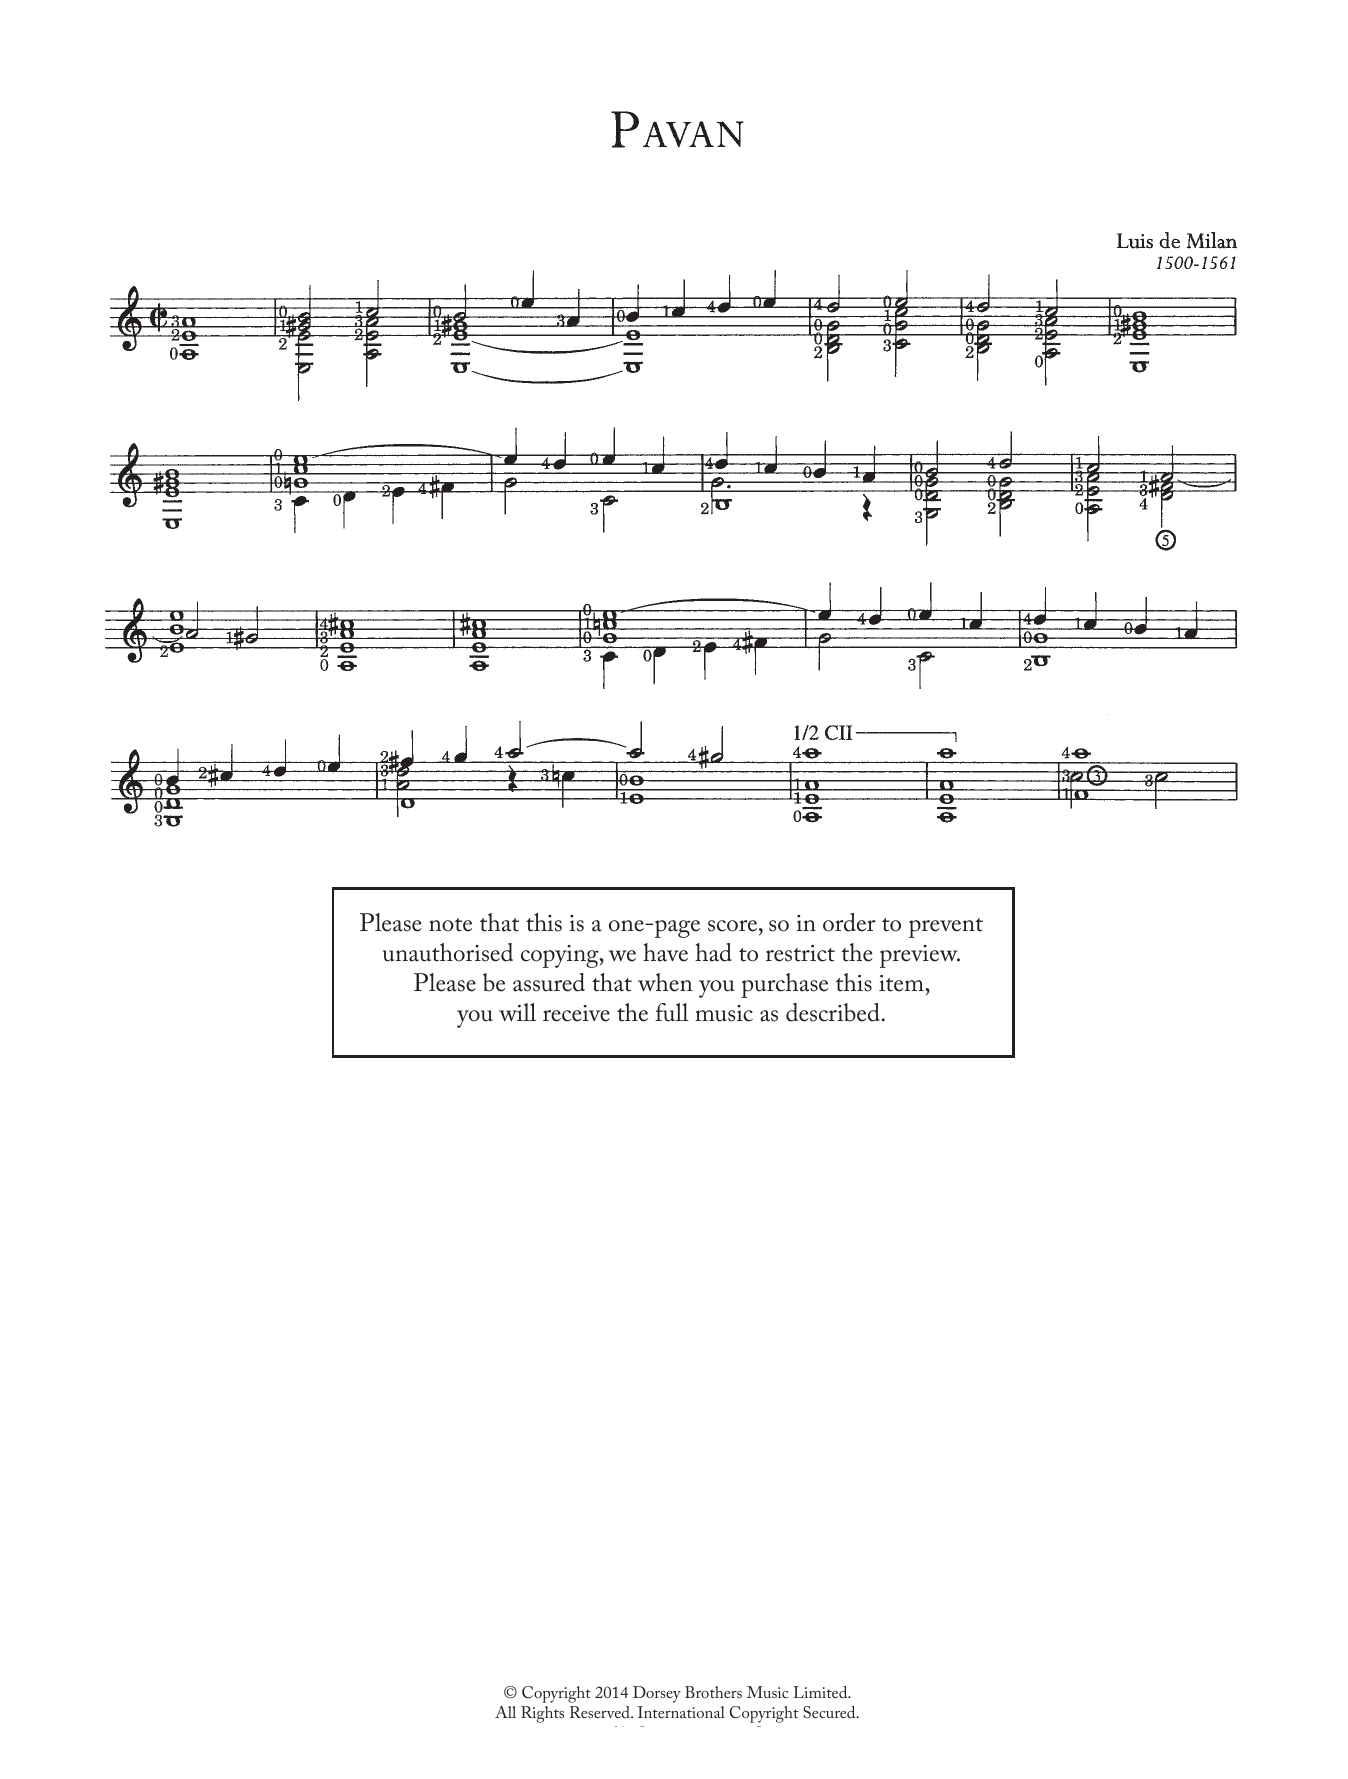 Luis de Milán Pavane No. 1 Sheet Music Notes & Chords for Guitar - Download or Print PDF